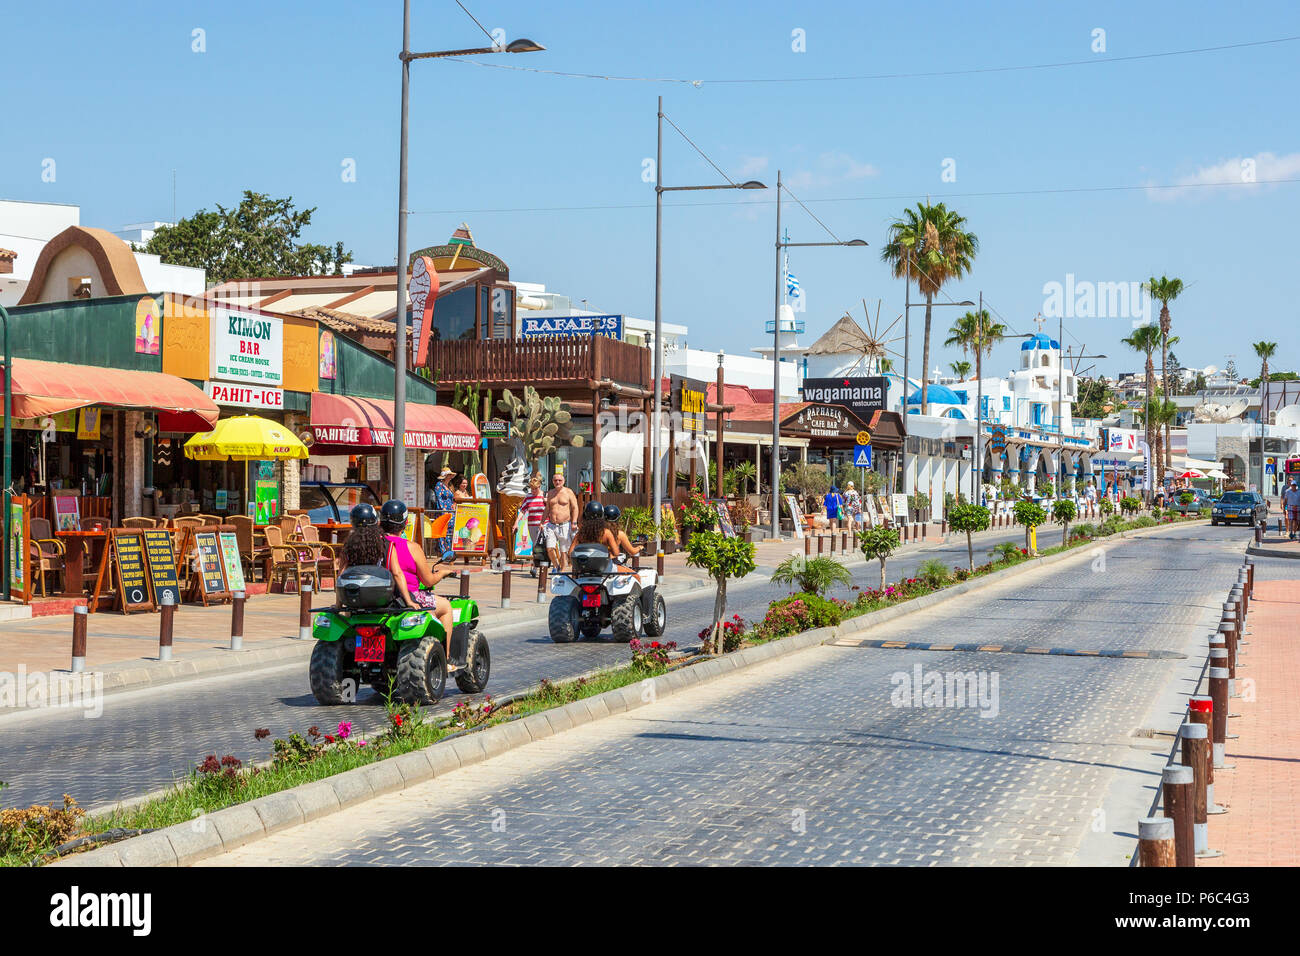 Street scene in Ayia Napa town, with tourists riding on 4x4 sand buggies, Ayia Napa, Cyprus Stock Photo